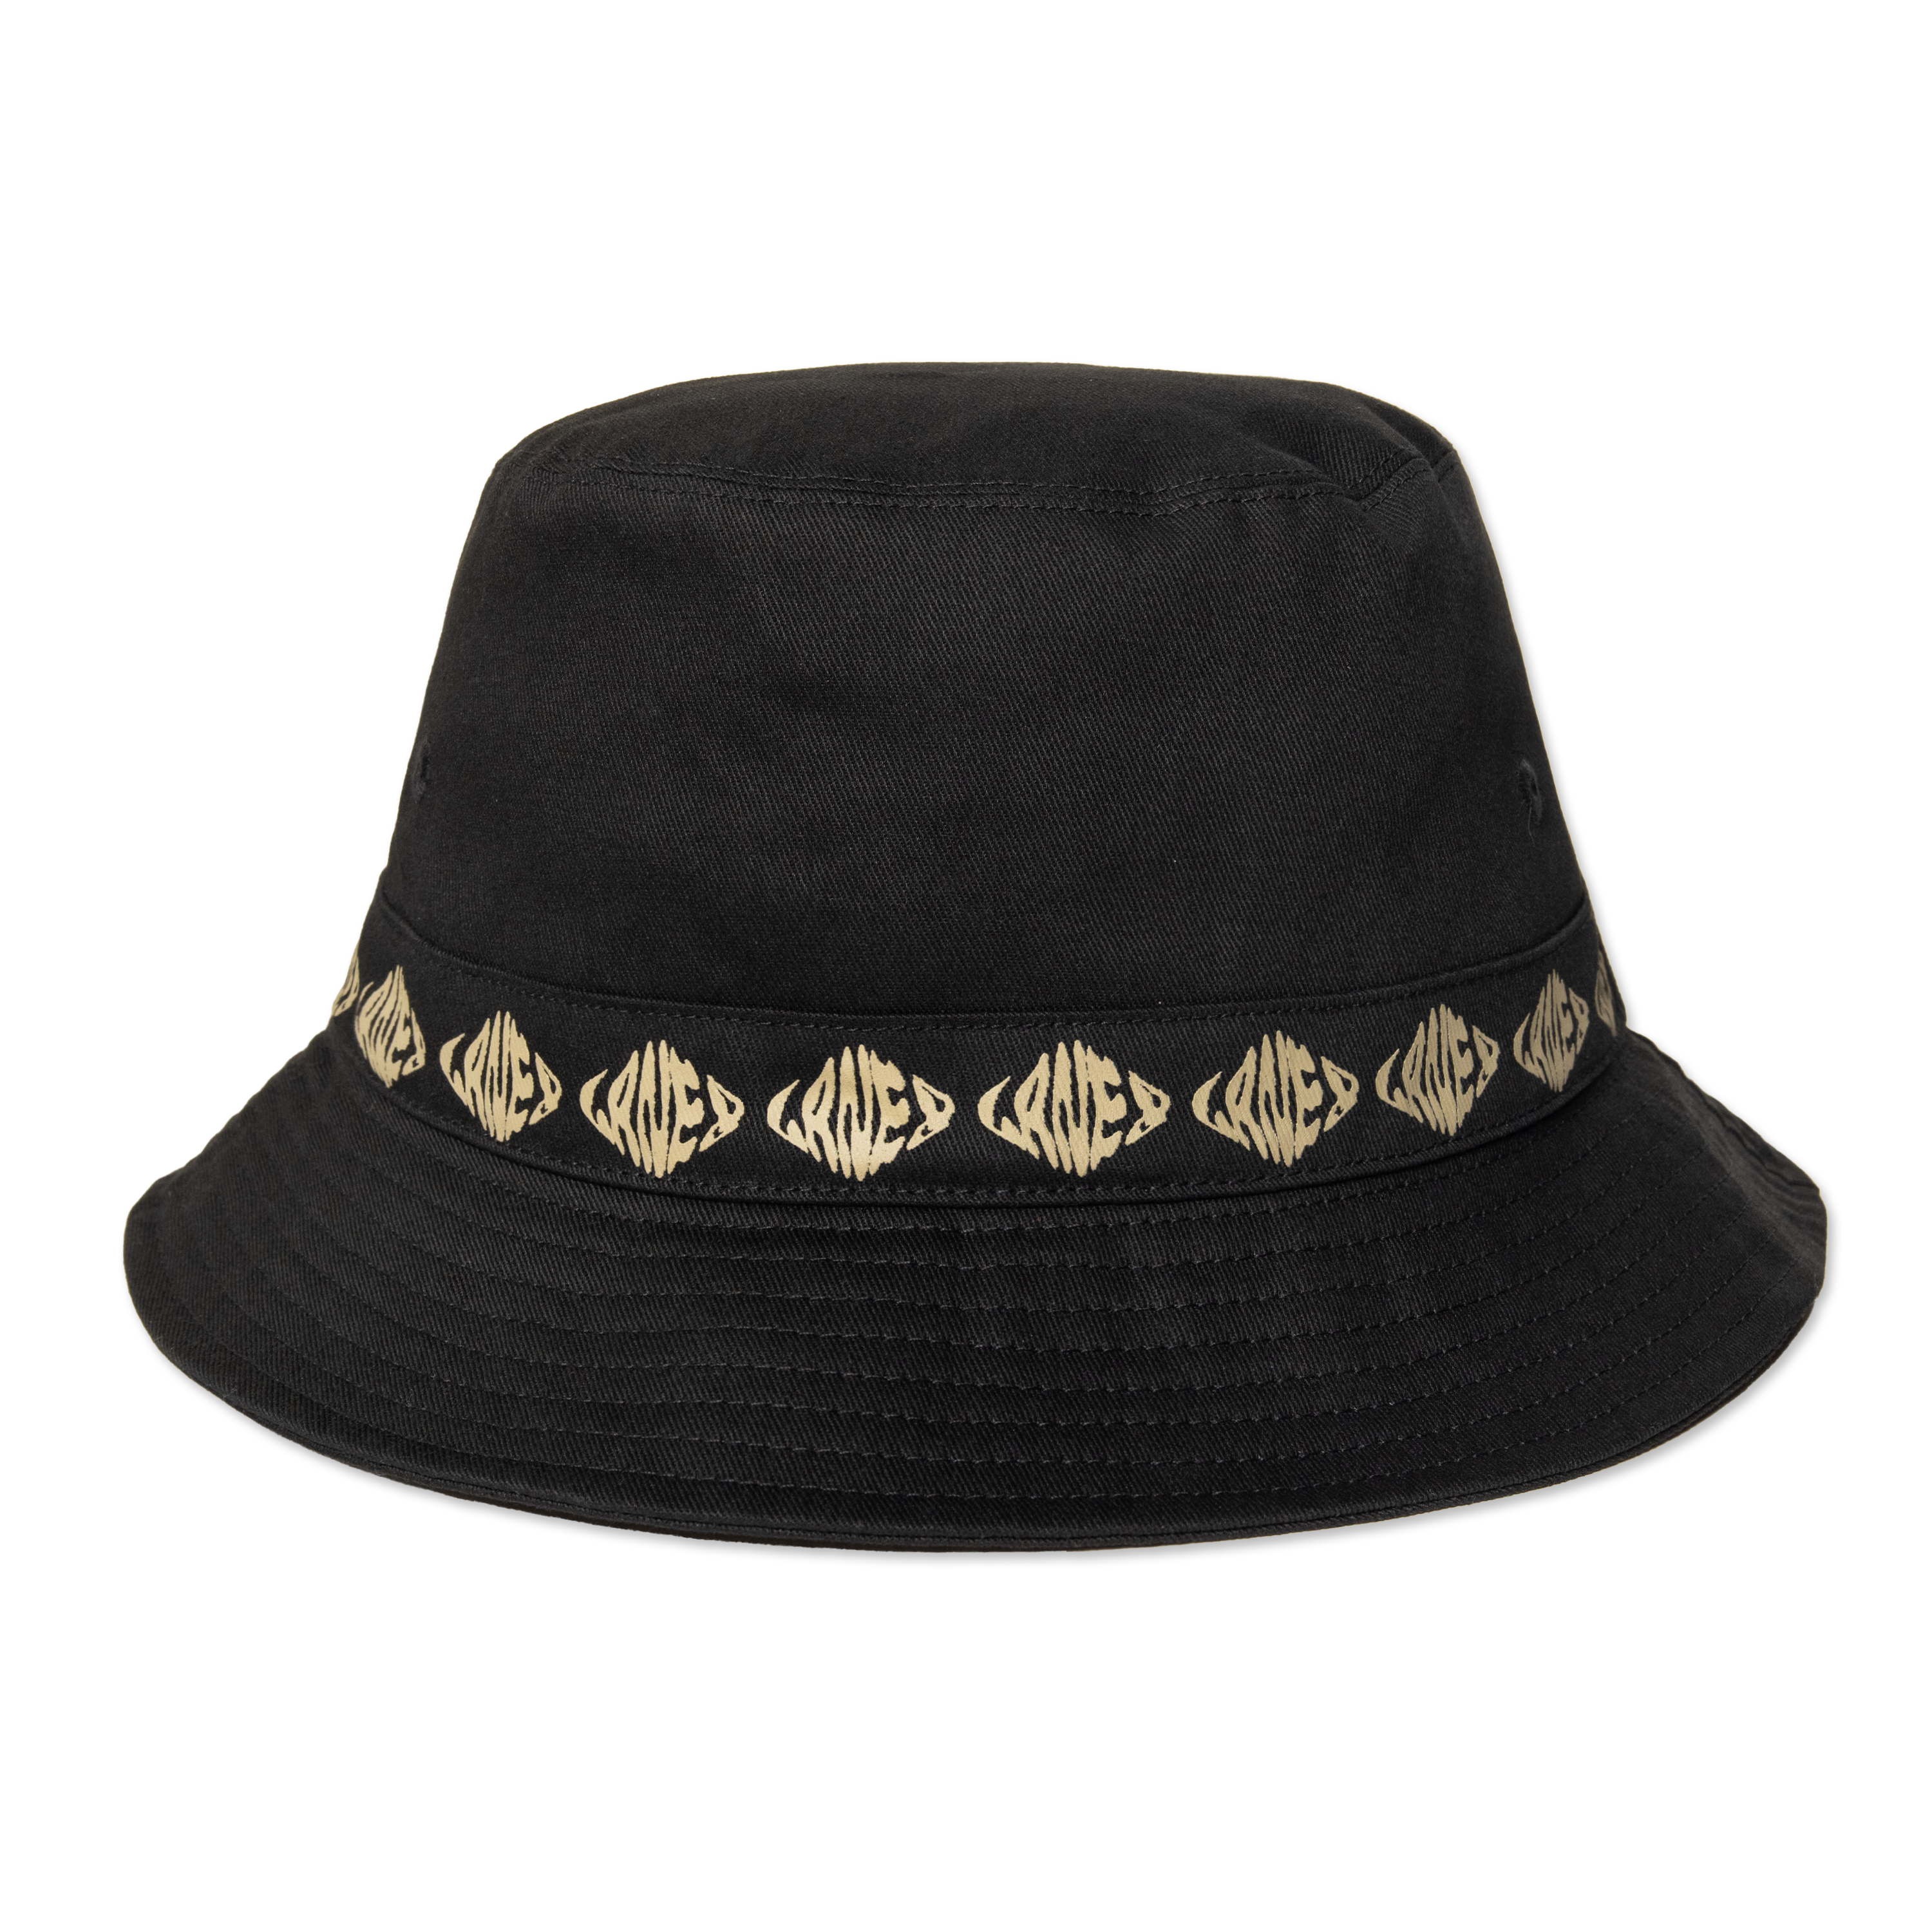 Lane 8 Bucket Hat